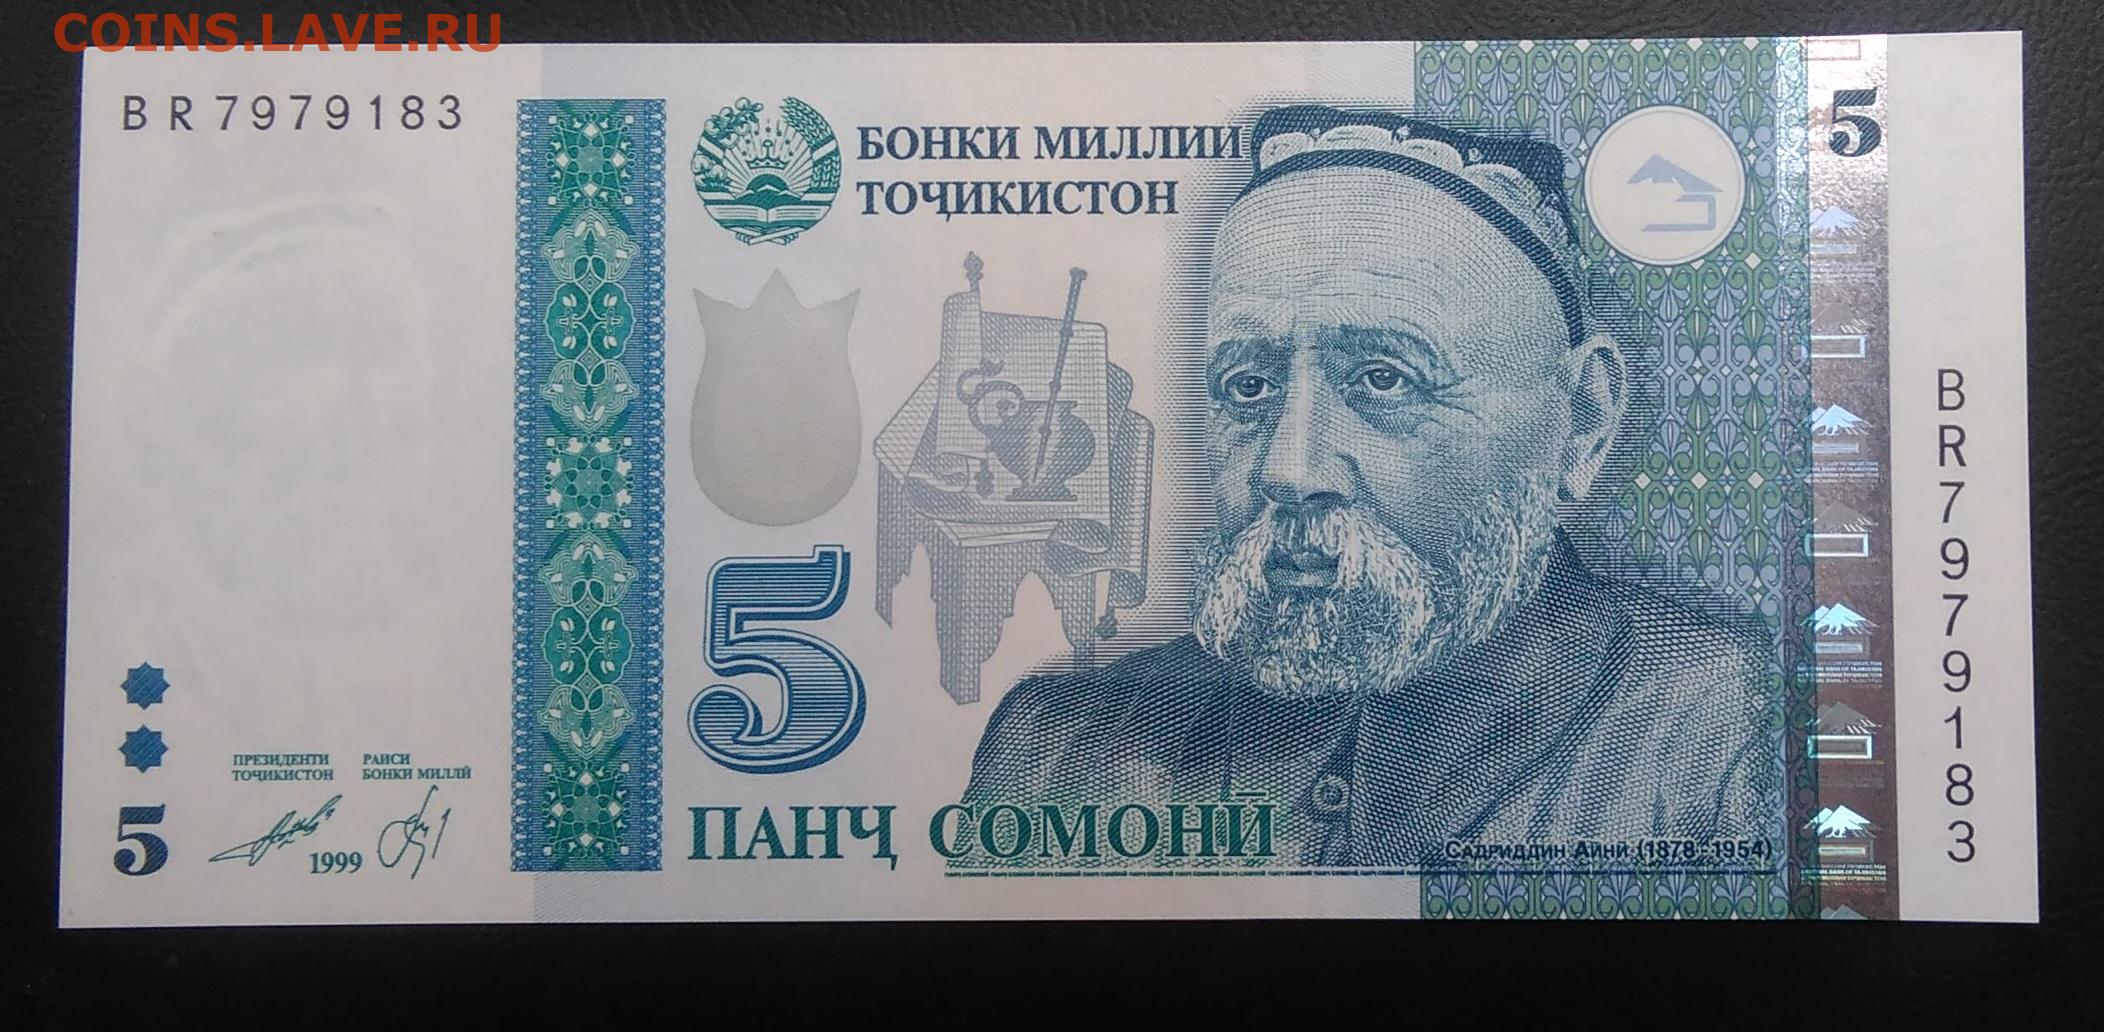 Сум рубль таджикистан. Банкноты Таджикистана: 5 Сомони. Купюры Таджикистана 1000 Сомони. Банкнота 10 Сомони 1999 год Таджикистан. Купюра Таджикистана 500 Сомони.